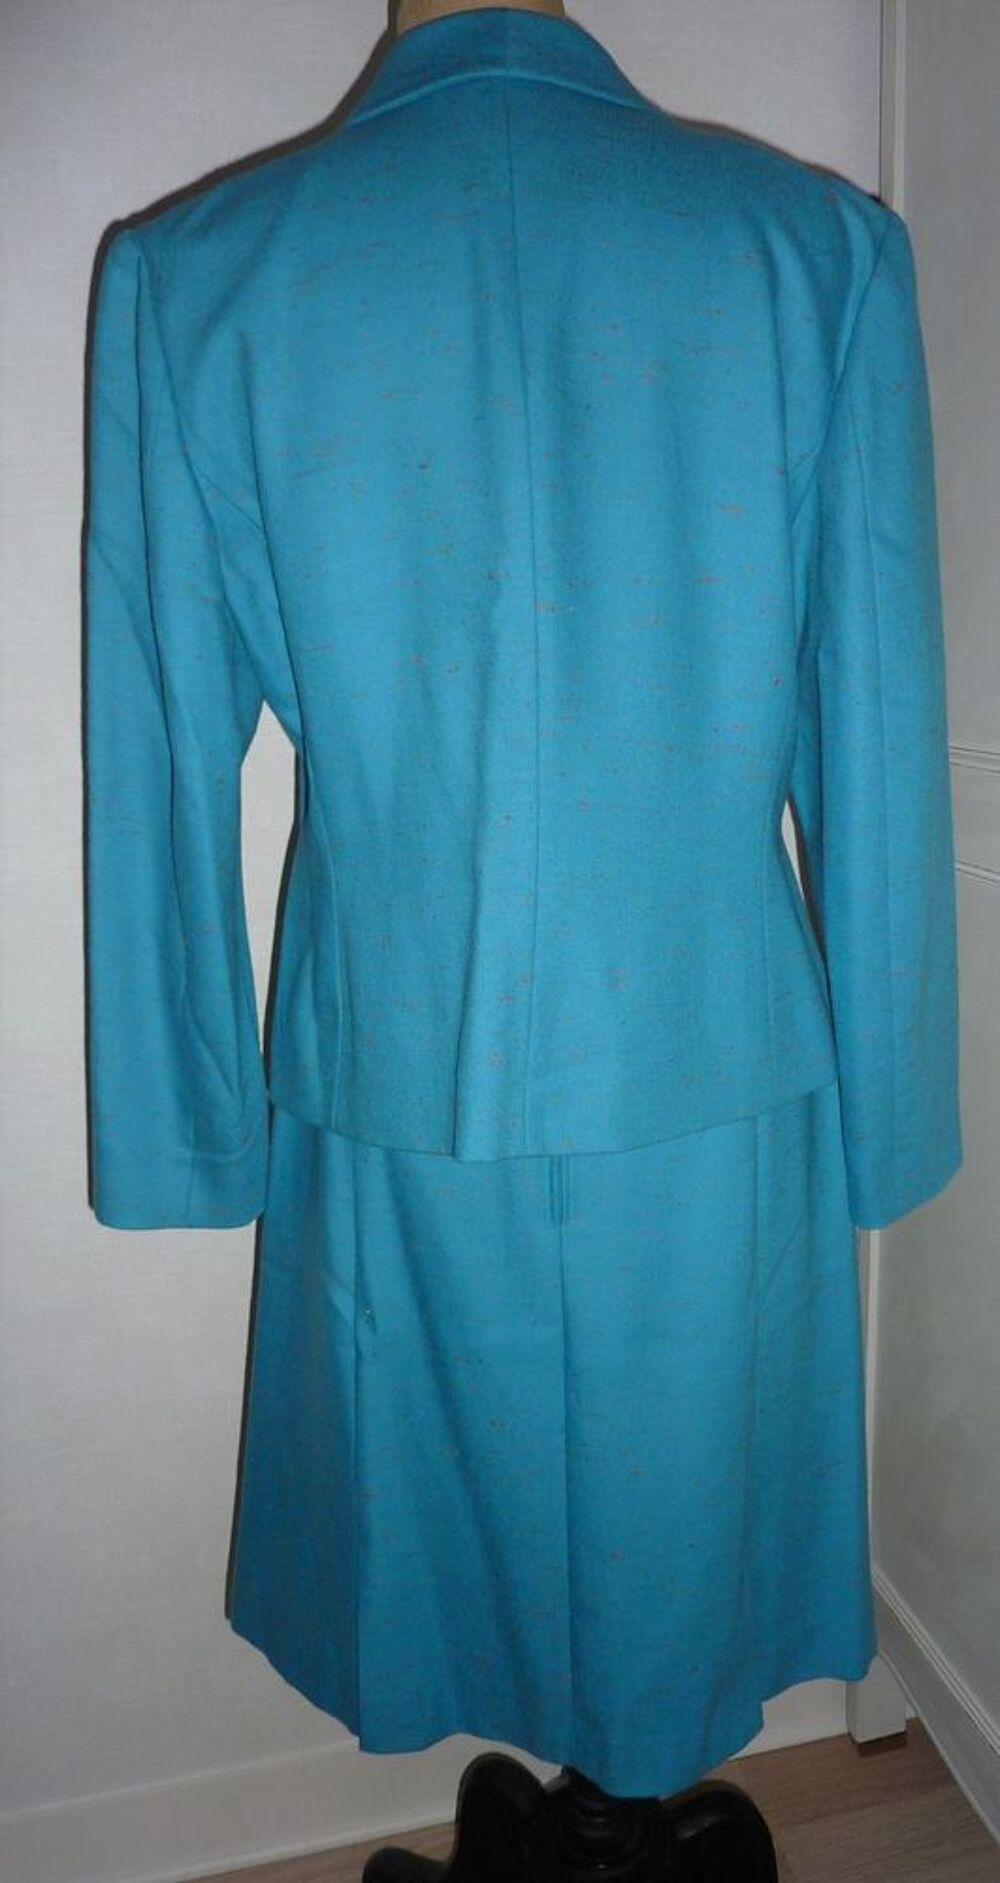 Ensemble veste et jupe Kenzo Jungle bleu turquoise taille 42 Vtements